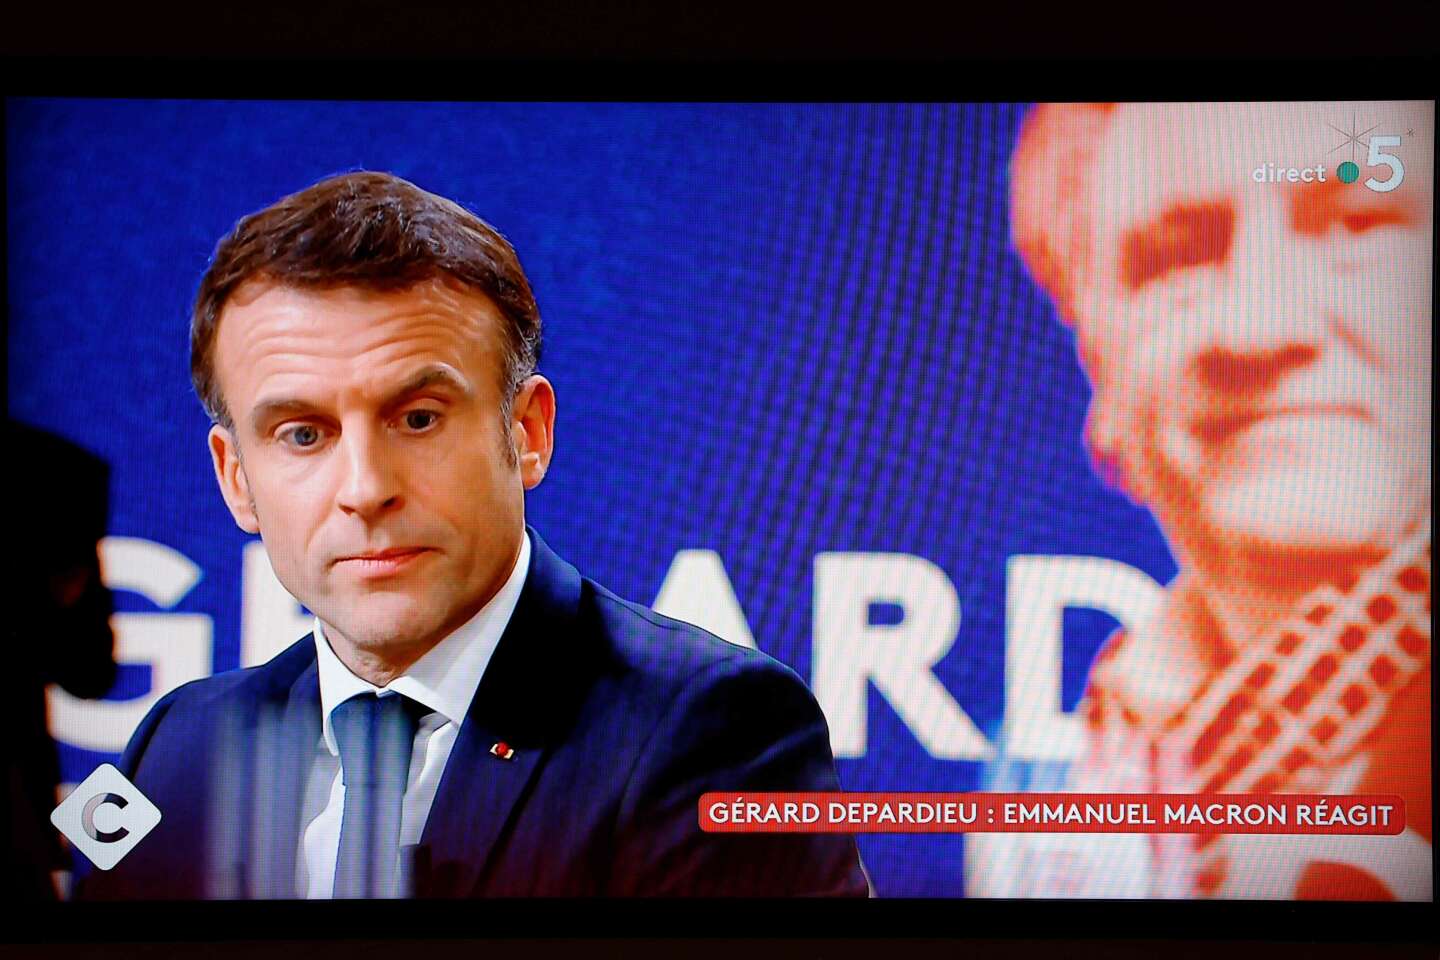 Emmanuel Macron defends Gérard Depardieu, feminists outraged